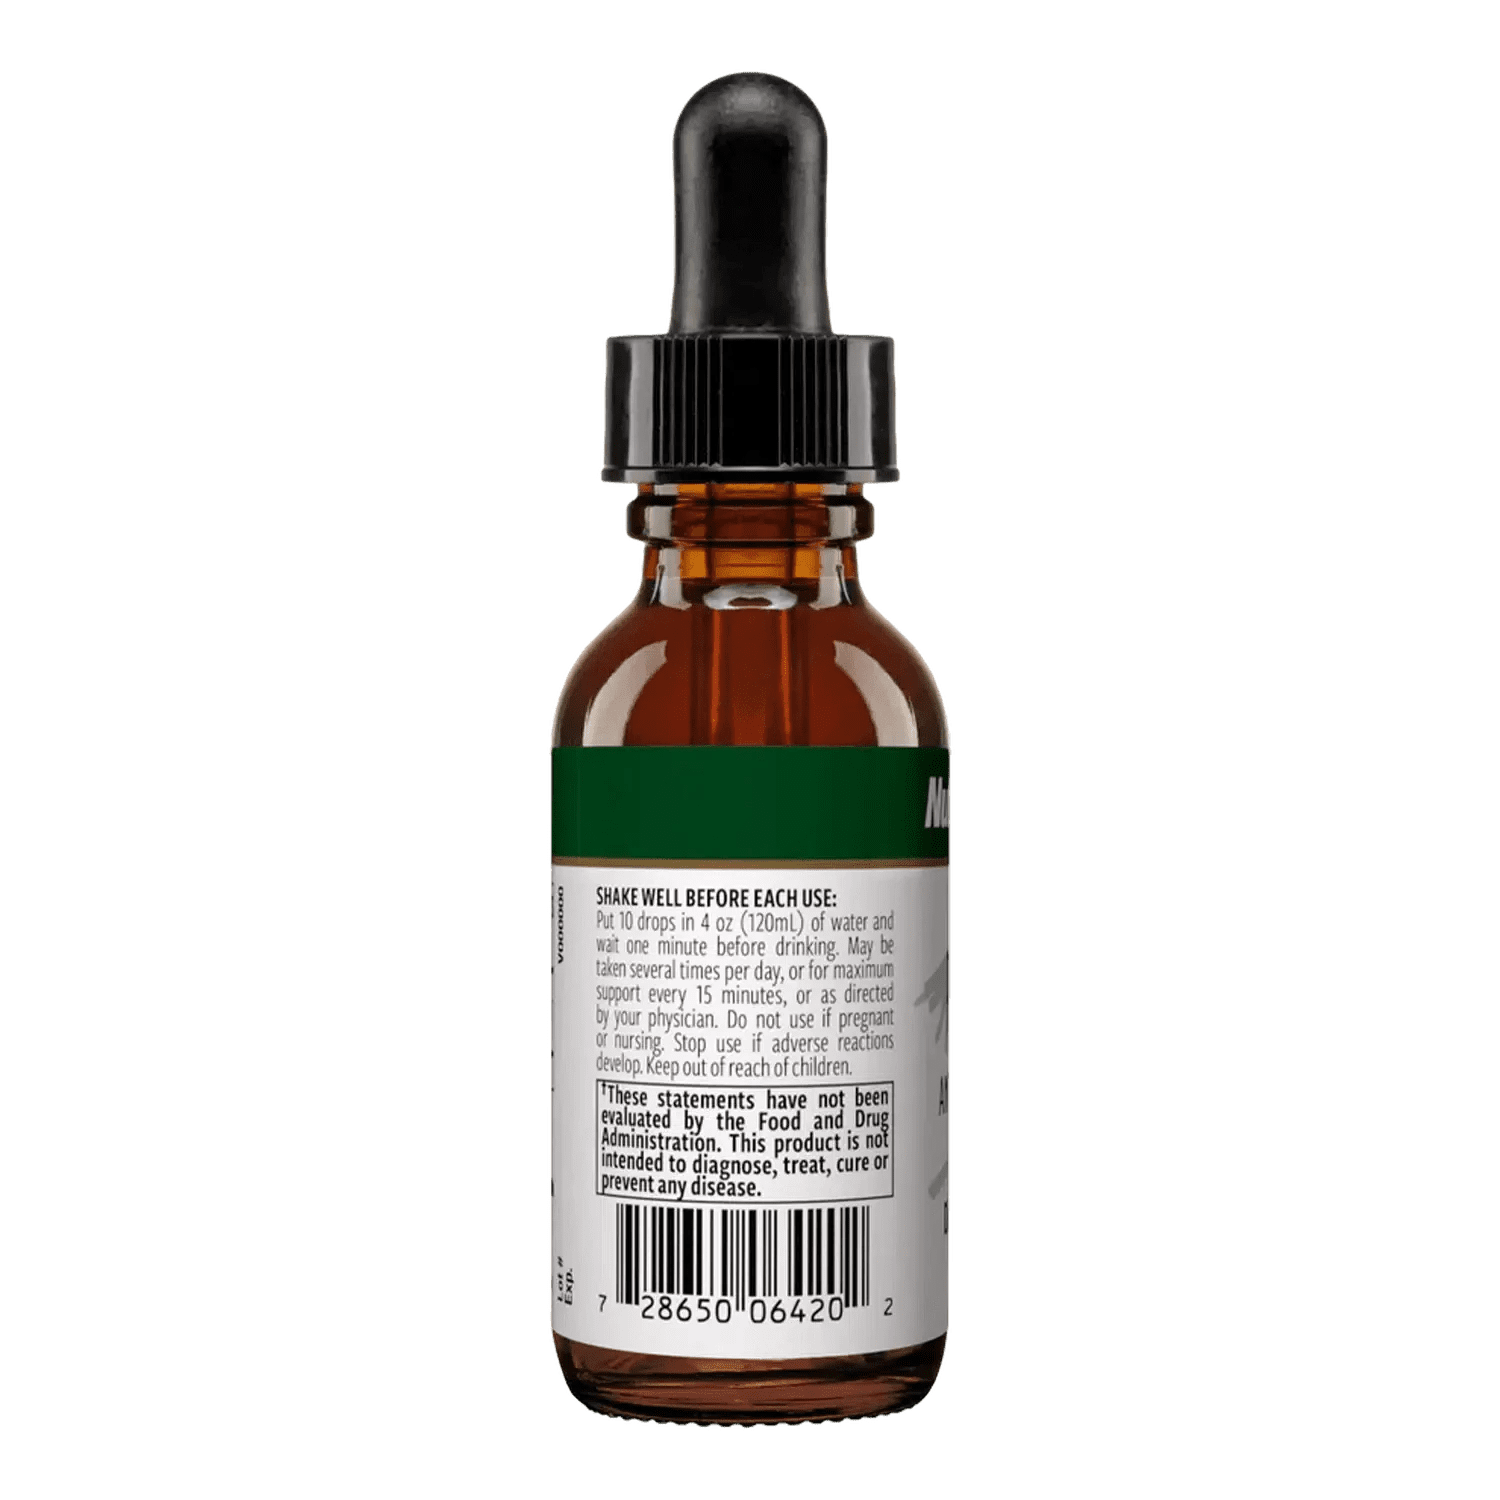 Parsley supplement - herbal cleanse liquid supplement